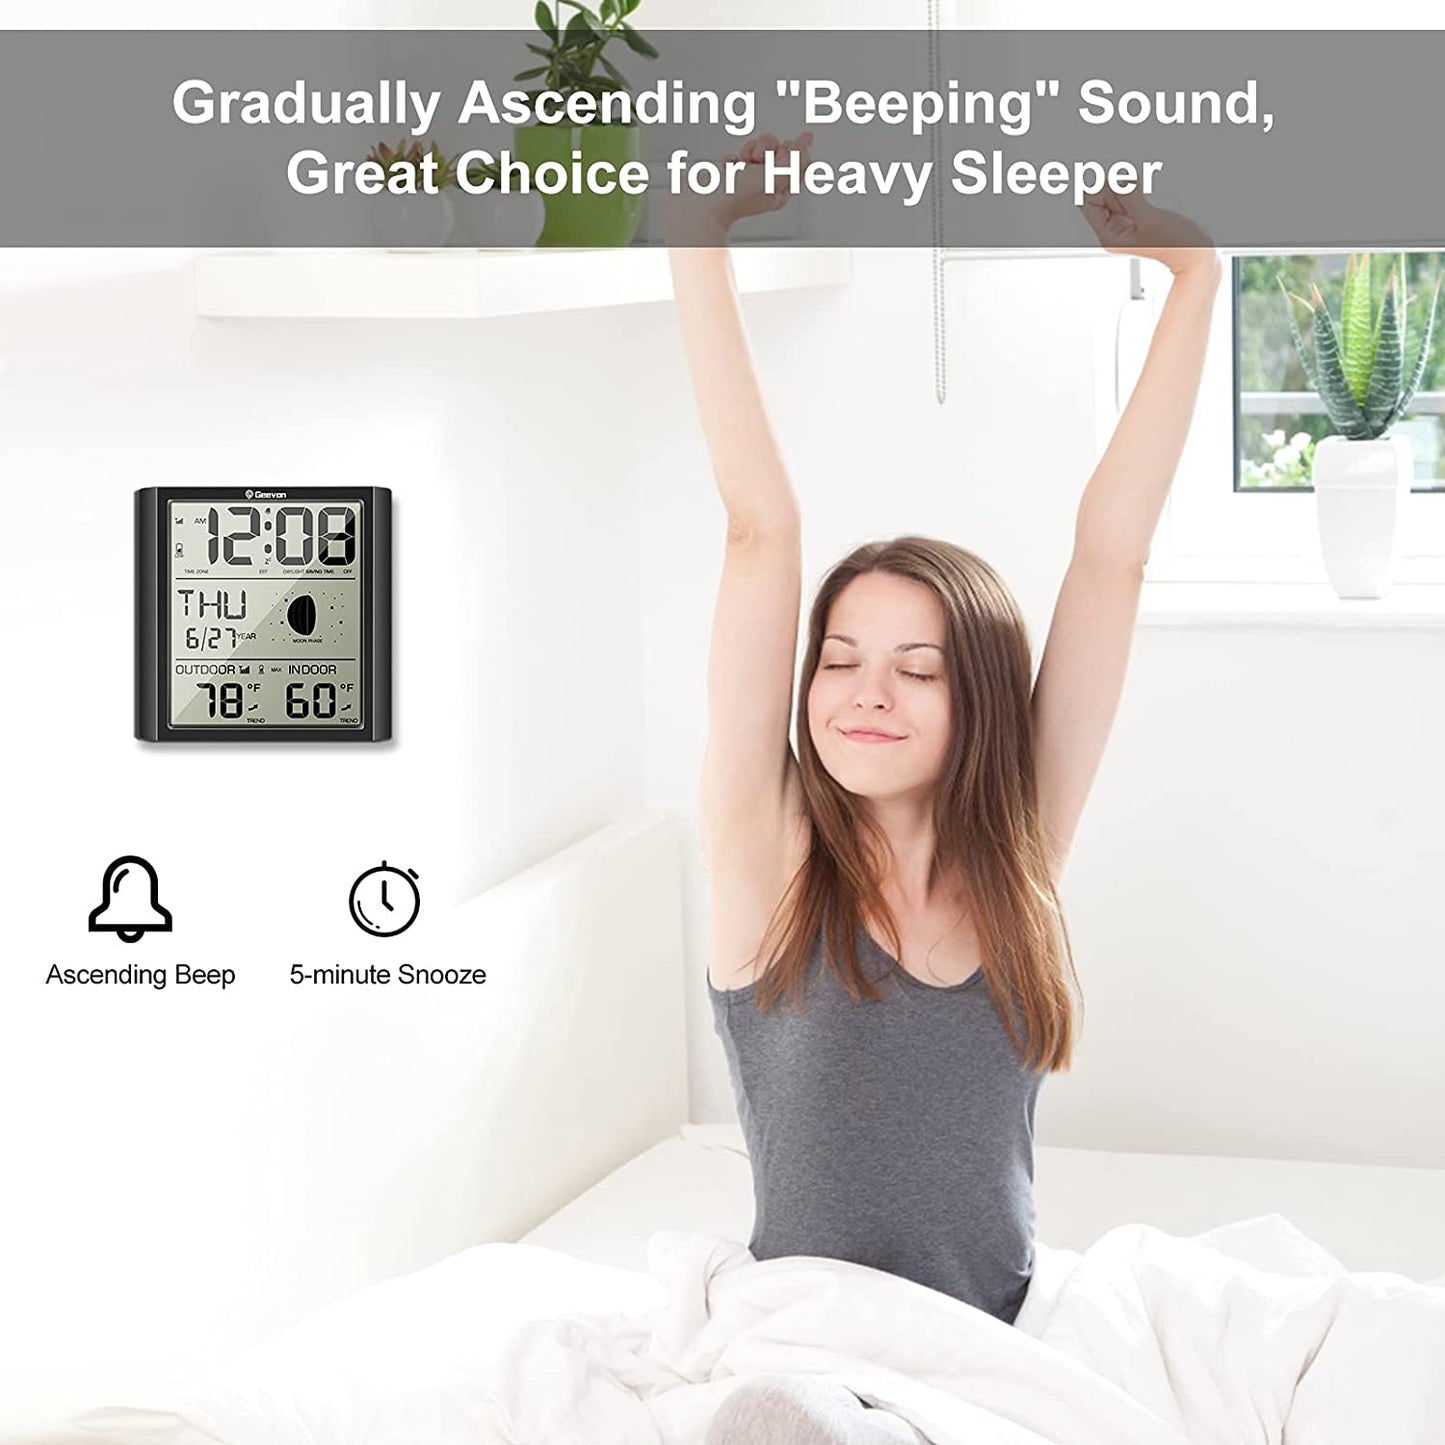 Geevon Digital Atomic Wall Clock,Auto-Set Atomic Alarm Clock with Indoor Outdoor Temperature,Calendar,Moon Phase for Home Office Elderly(1 Wireless Outdoor Sensor)